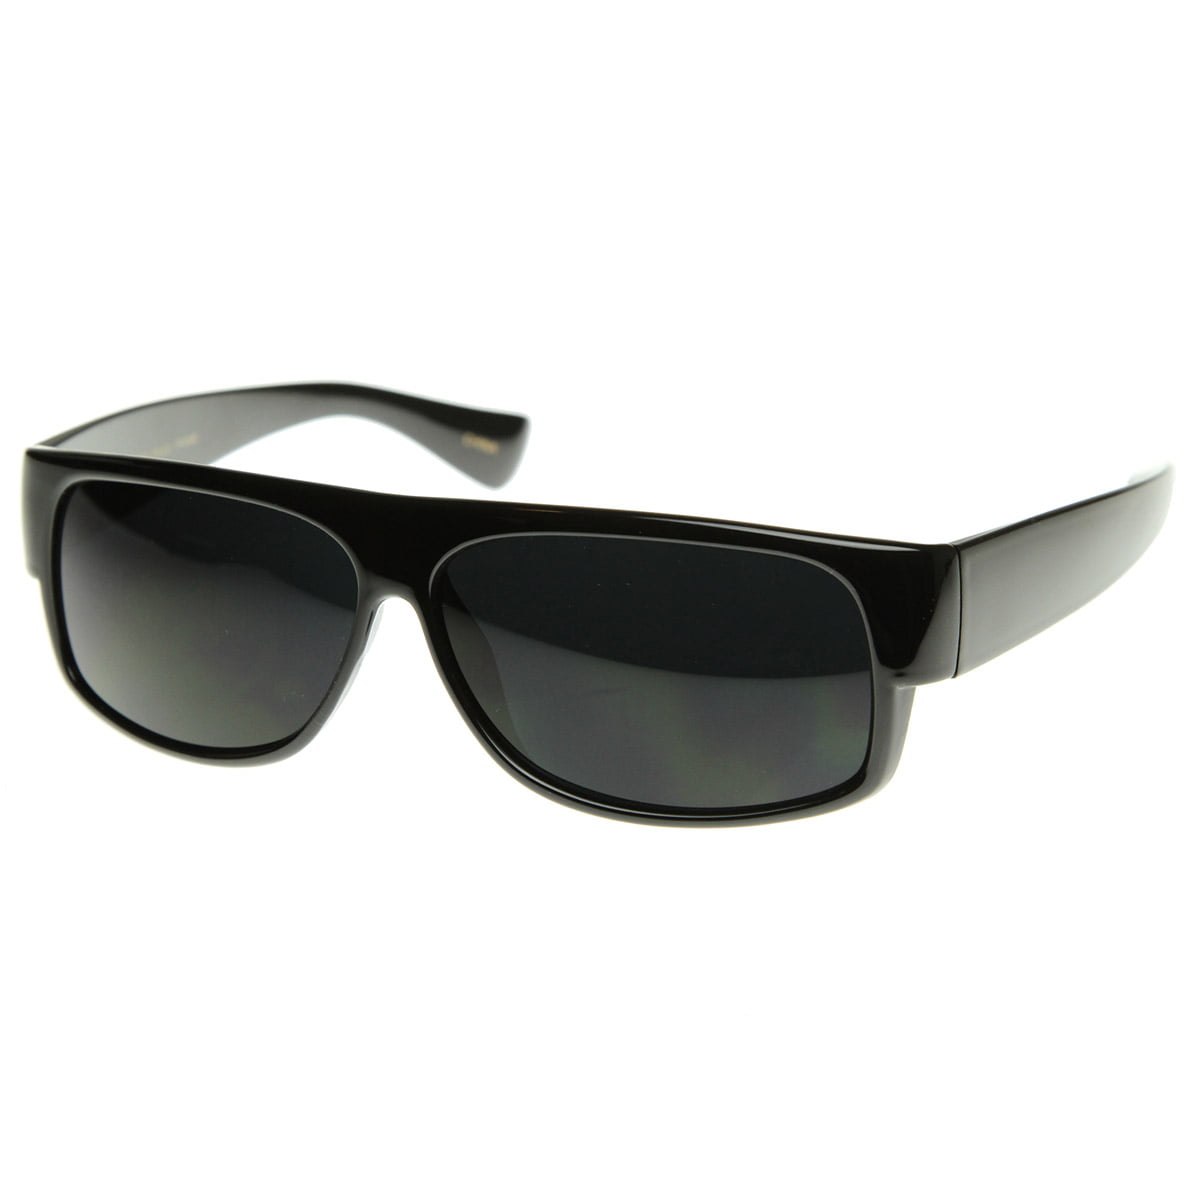 Authentic Eazy E Black LOCS SUPER DARK Car Motorcycle Sunglasses Mad Dogger Bl 